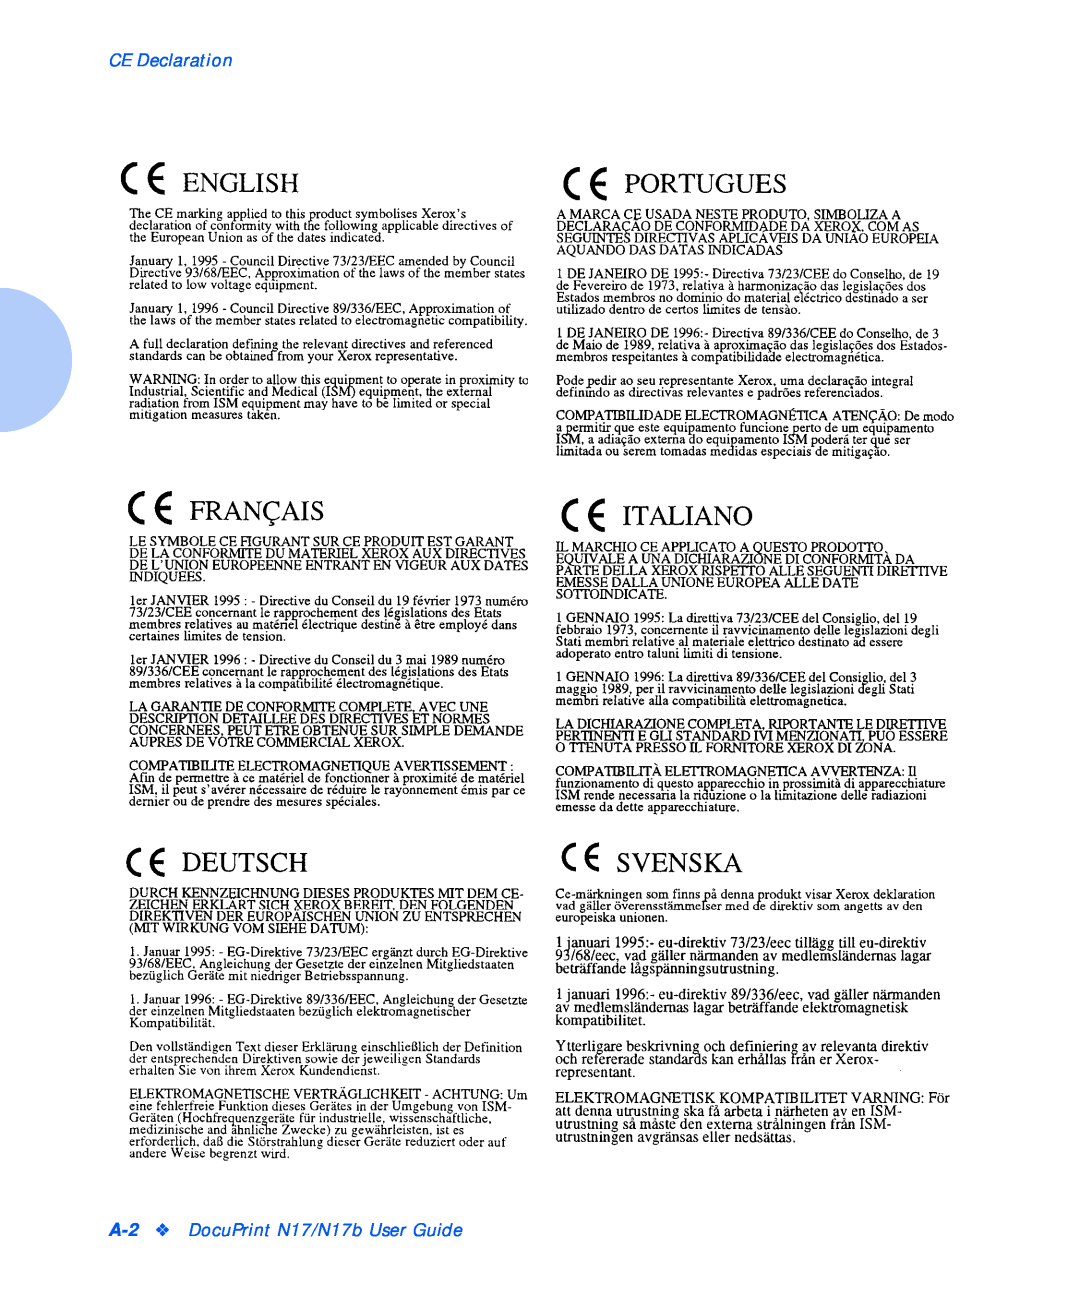 Xerox manual CE Declaration, A-2 DocuPrint N17/N17b User Guide 